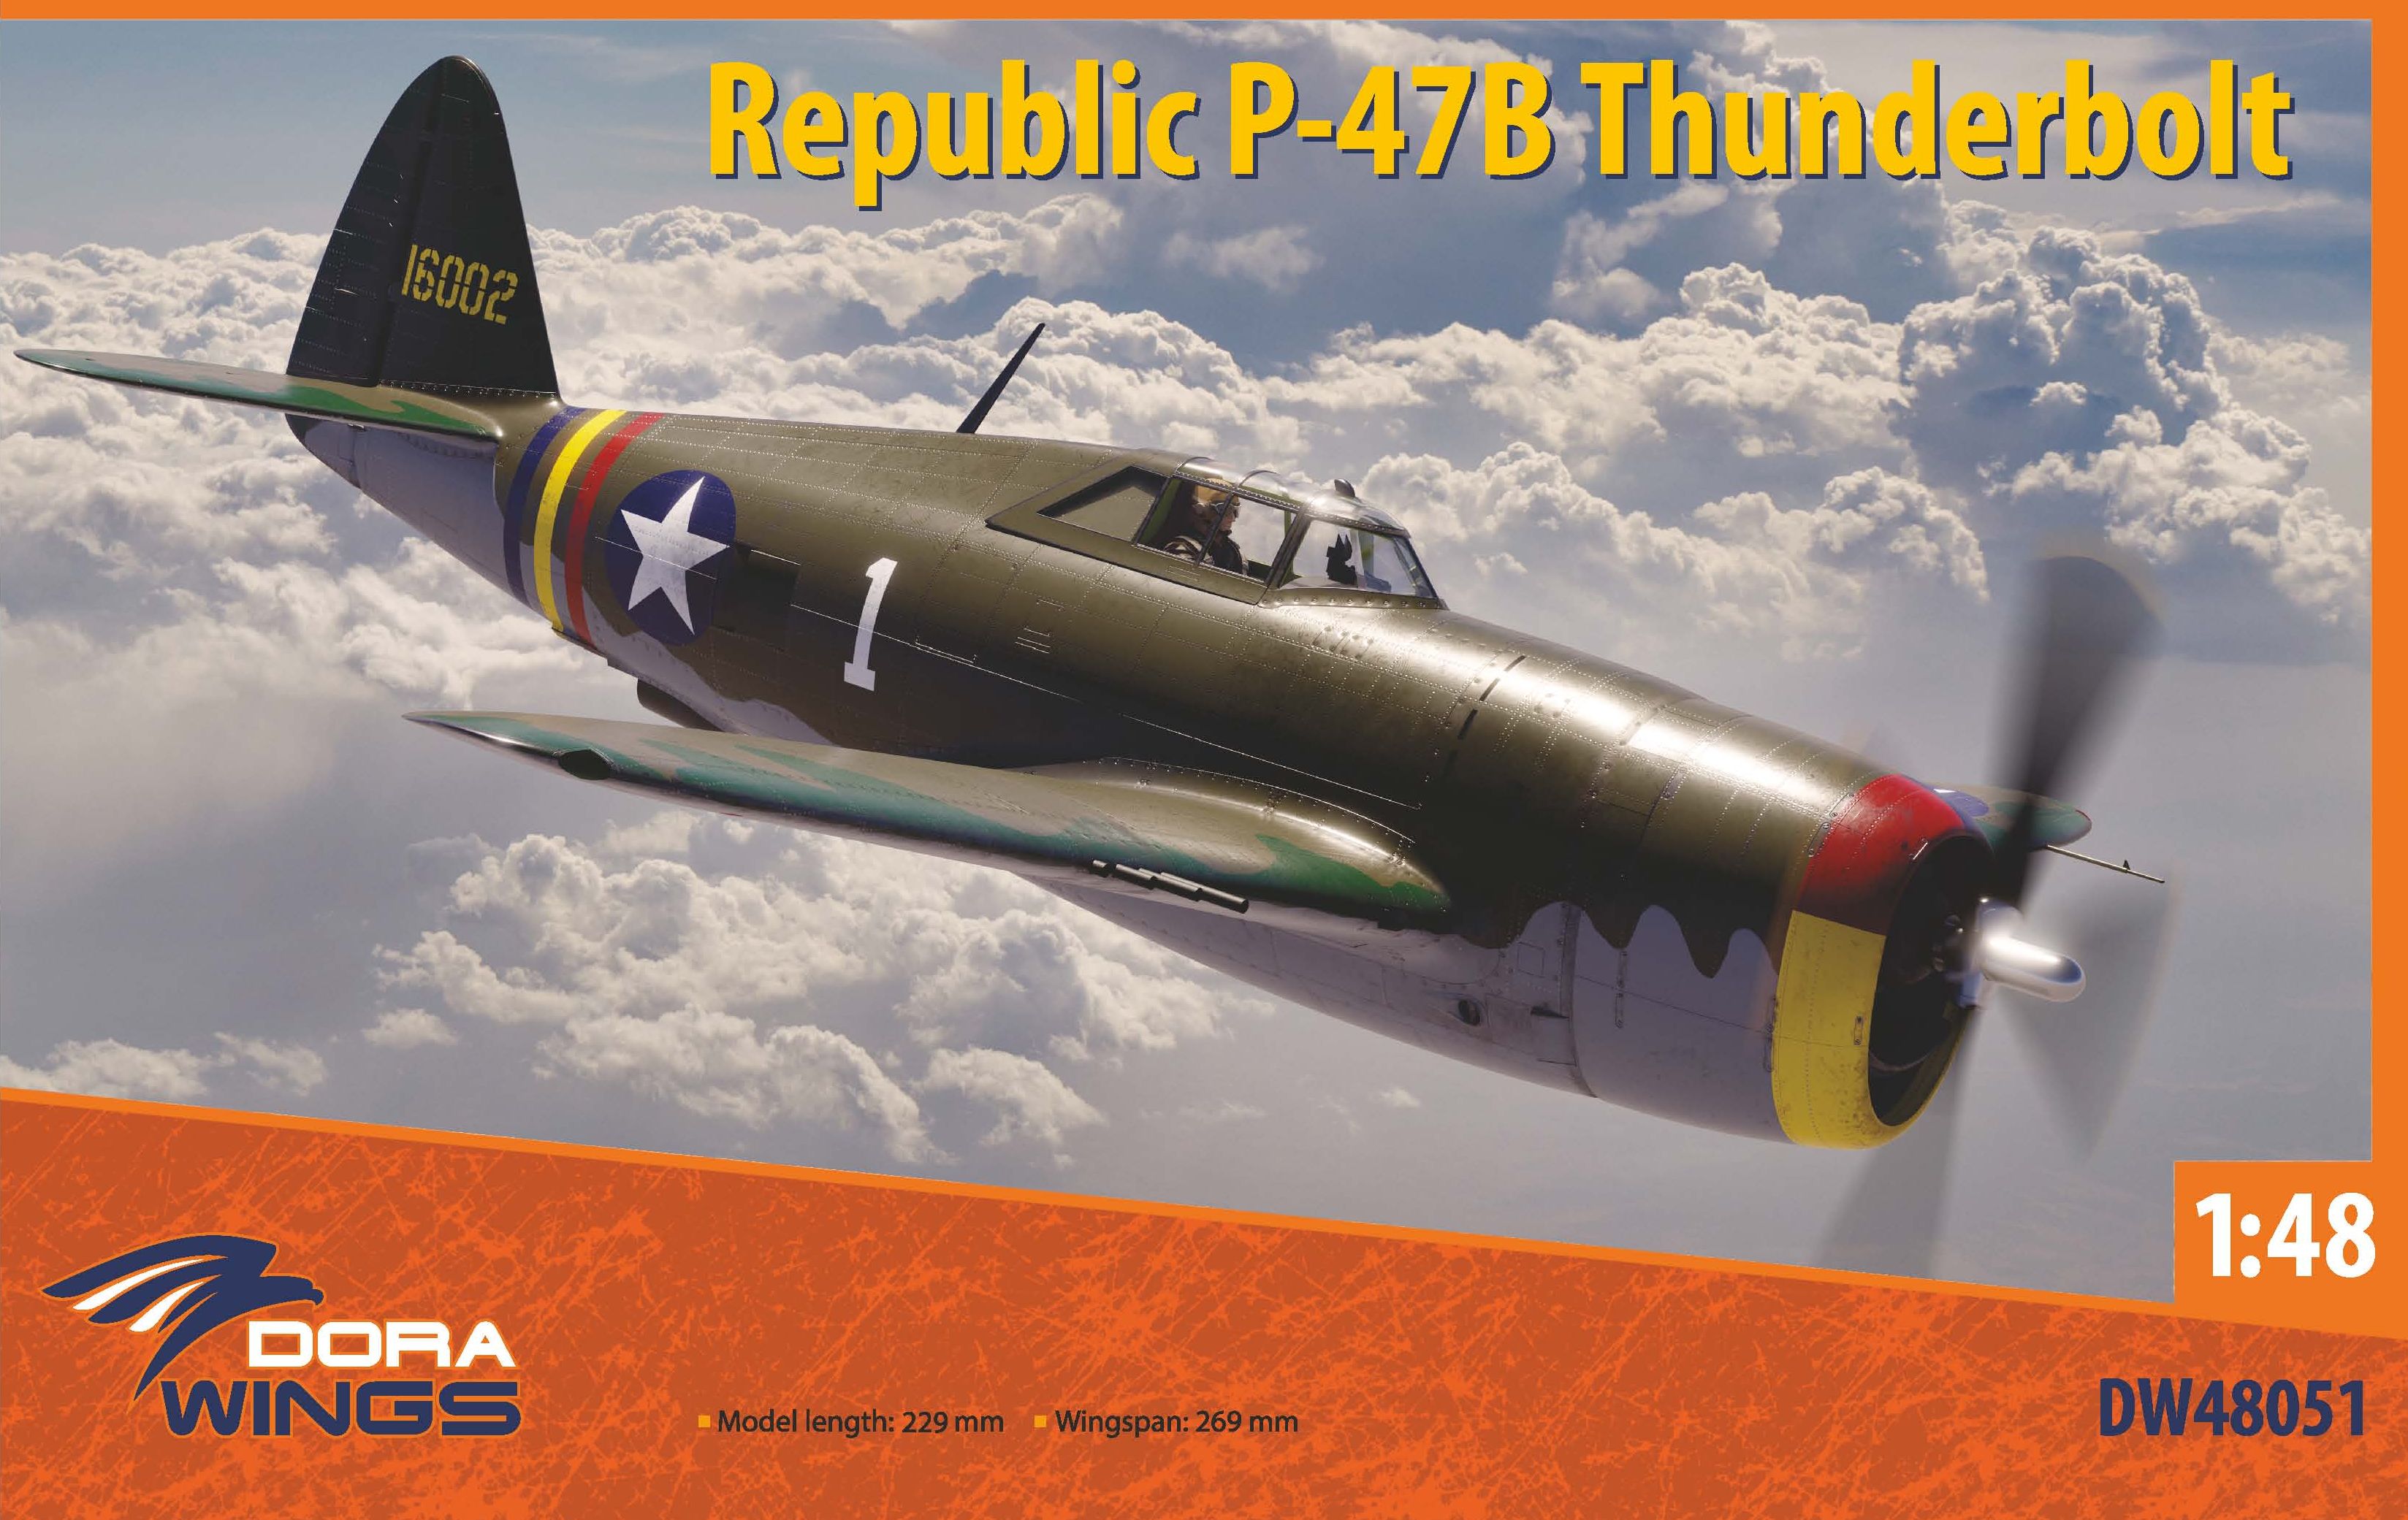 Republic P-47B Thunderbolt (DW48051). In stock.